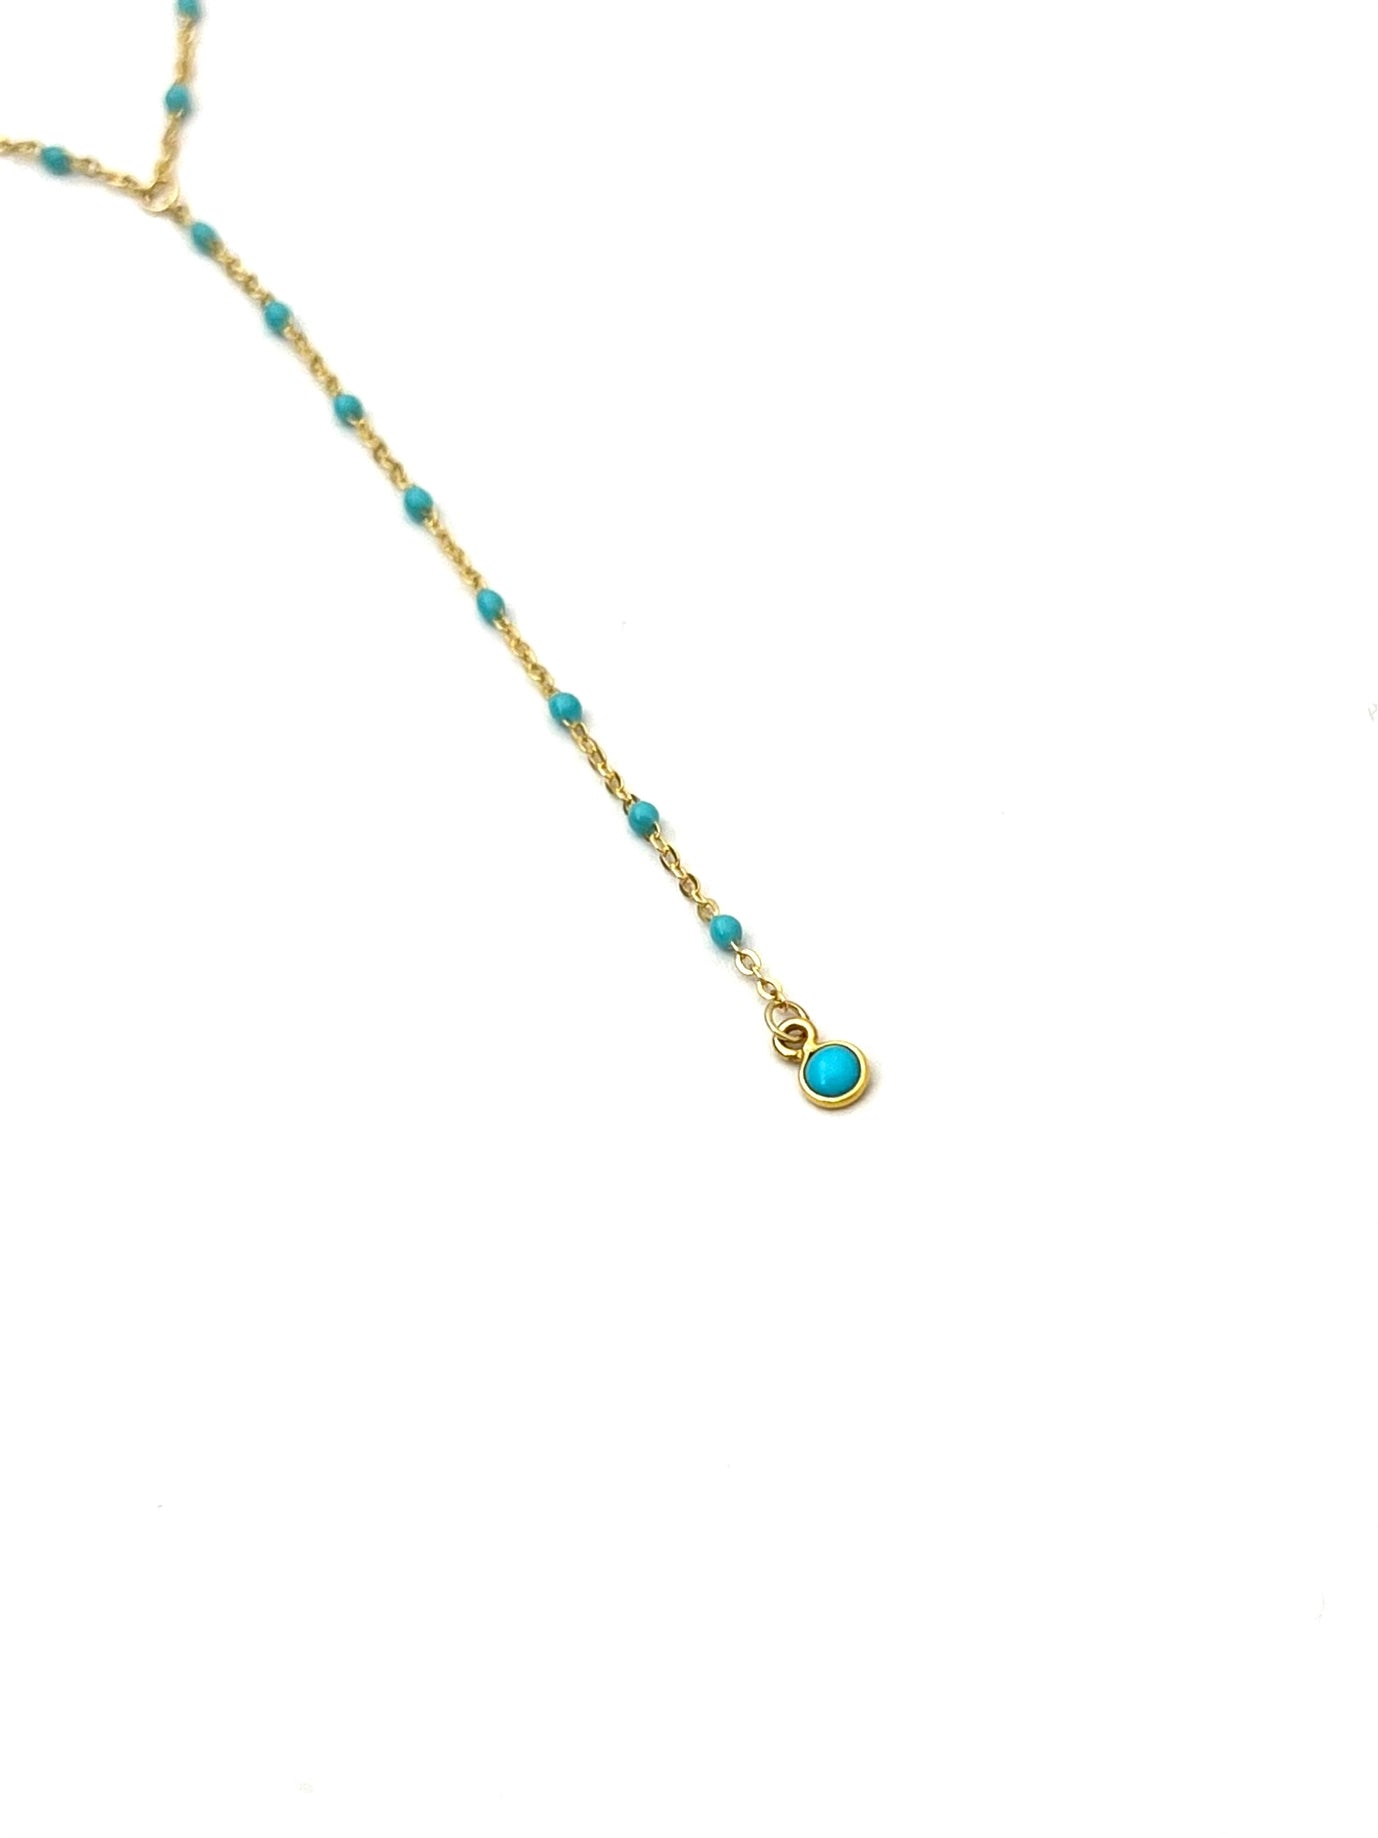 14K Enamel Bead Lariat Necklace with Gemstone Drop - Turquoise